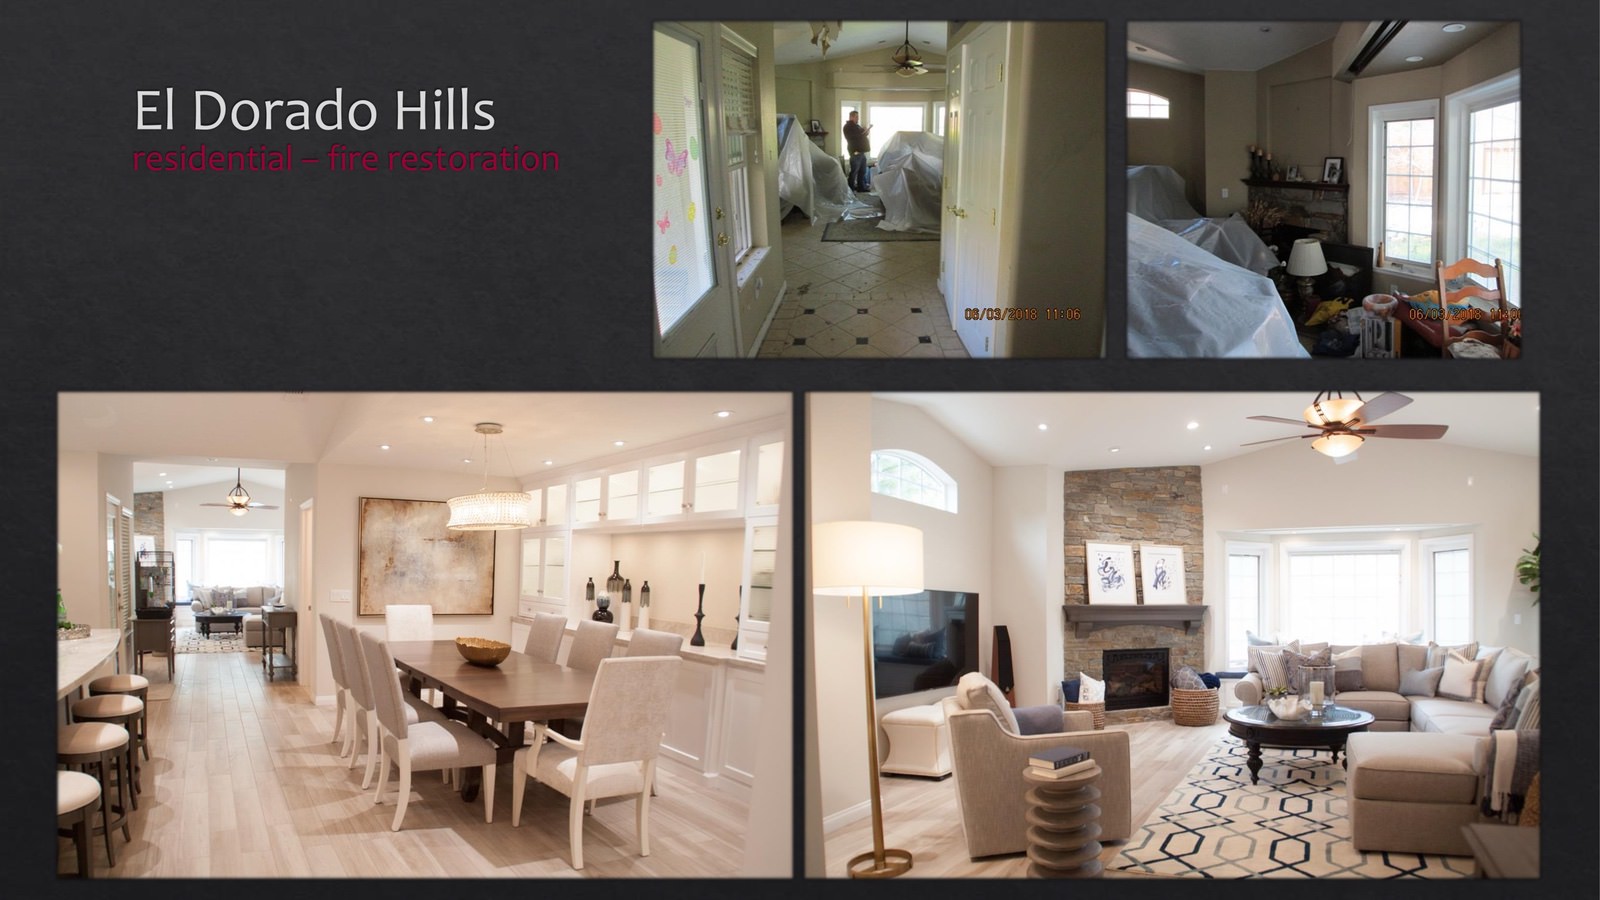 El Dorado Hills Residential fire restoration - kitchen and living room